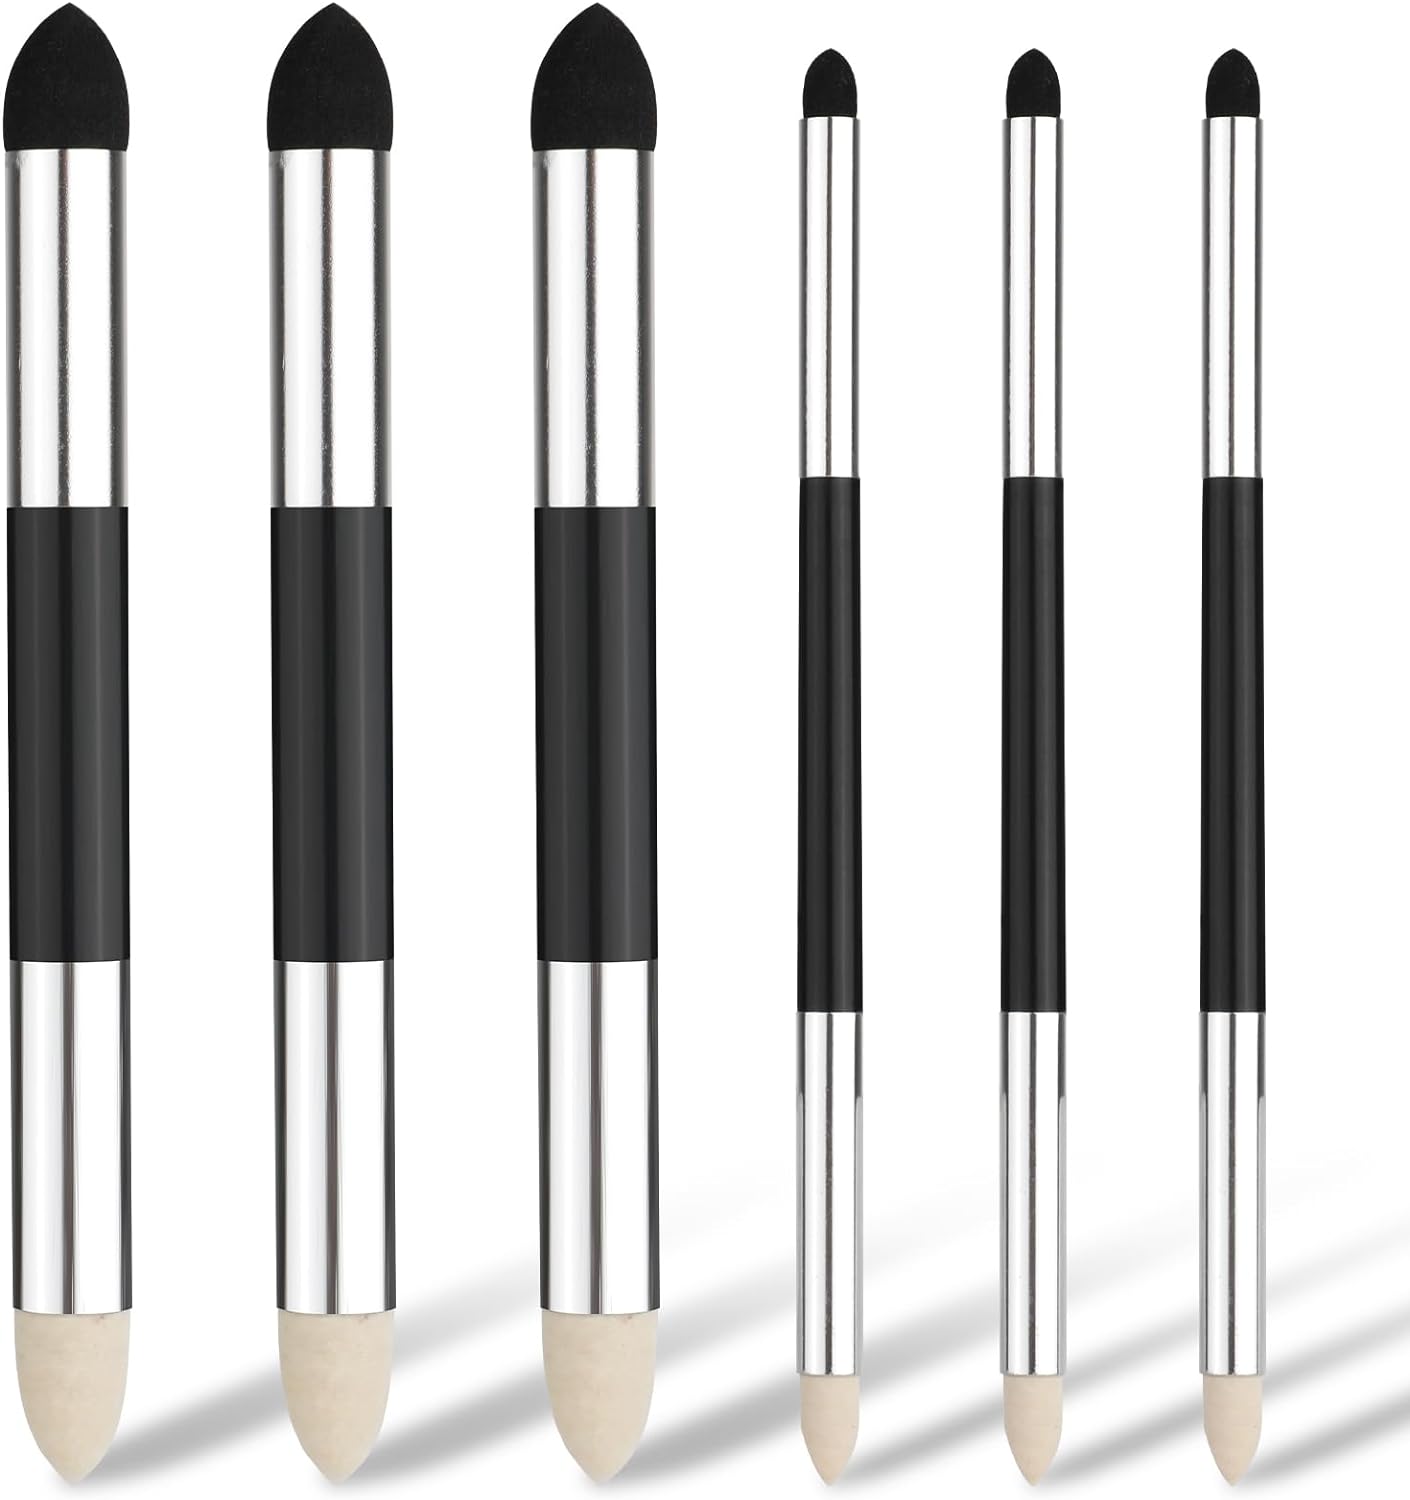 6pcs Artist Blending Sponge Pen,Double-Headed Rubbing Tool